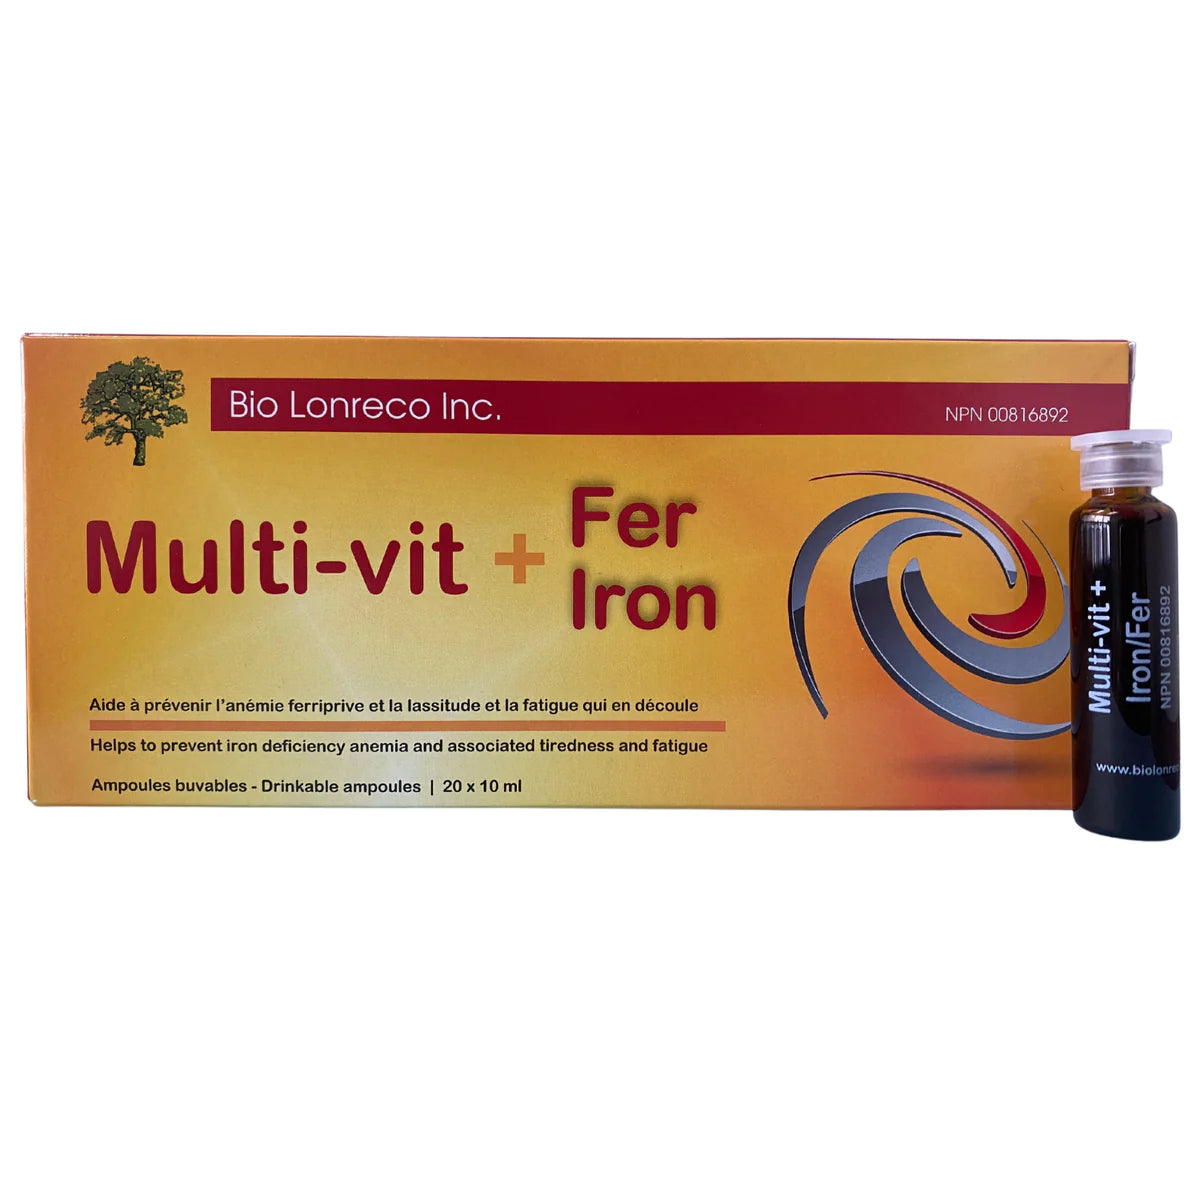 Multi-vit + Iron, Bio Lonreco